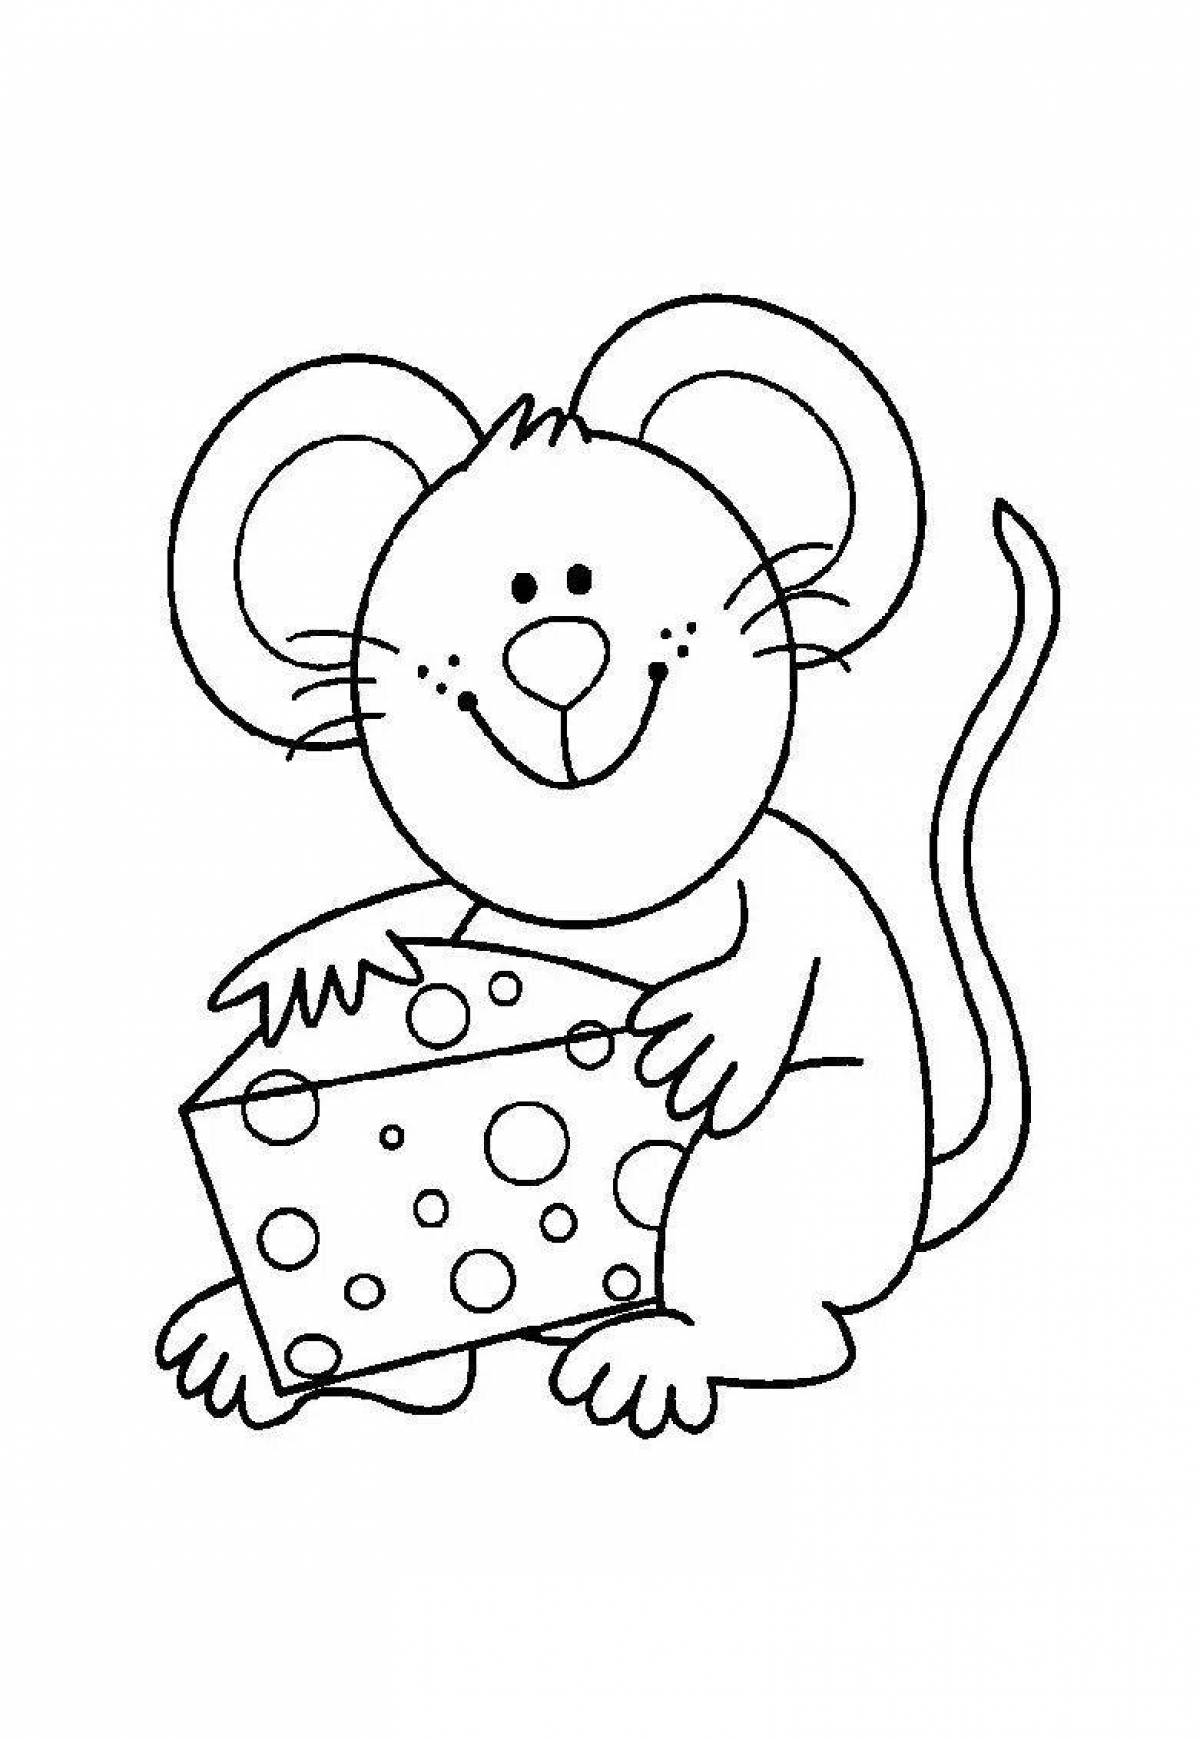 Amazing mouse norushka coloring book